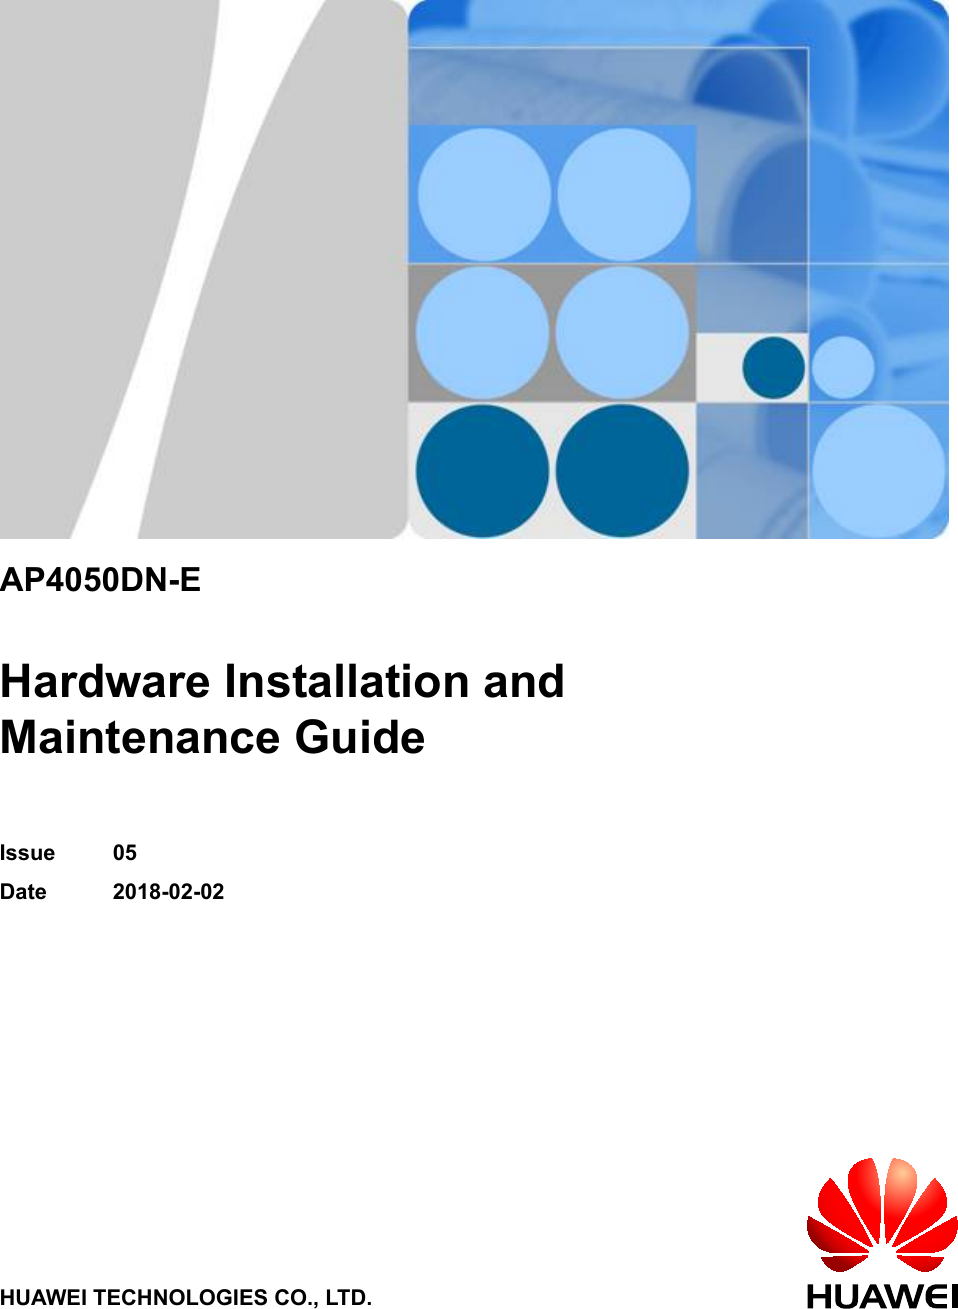 AP4050DN-EHardware Installation andMaintenance GuideIssue 05Date 2018-02-02HUAWEI TECHNOLOGIES CO., LTD.